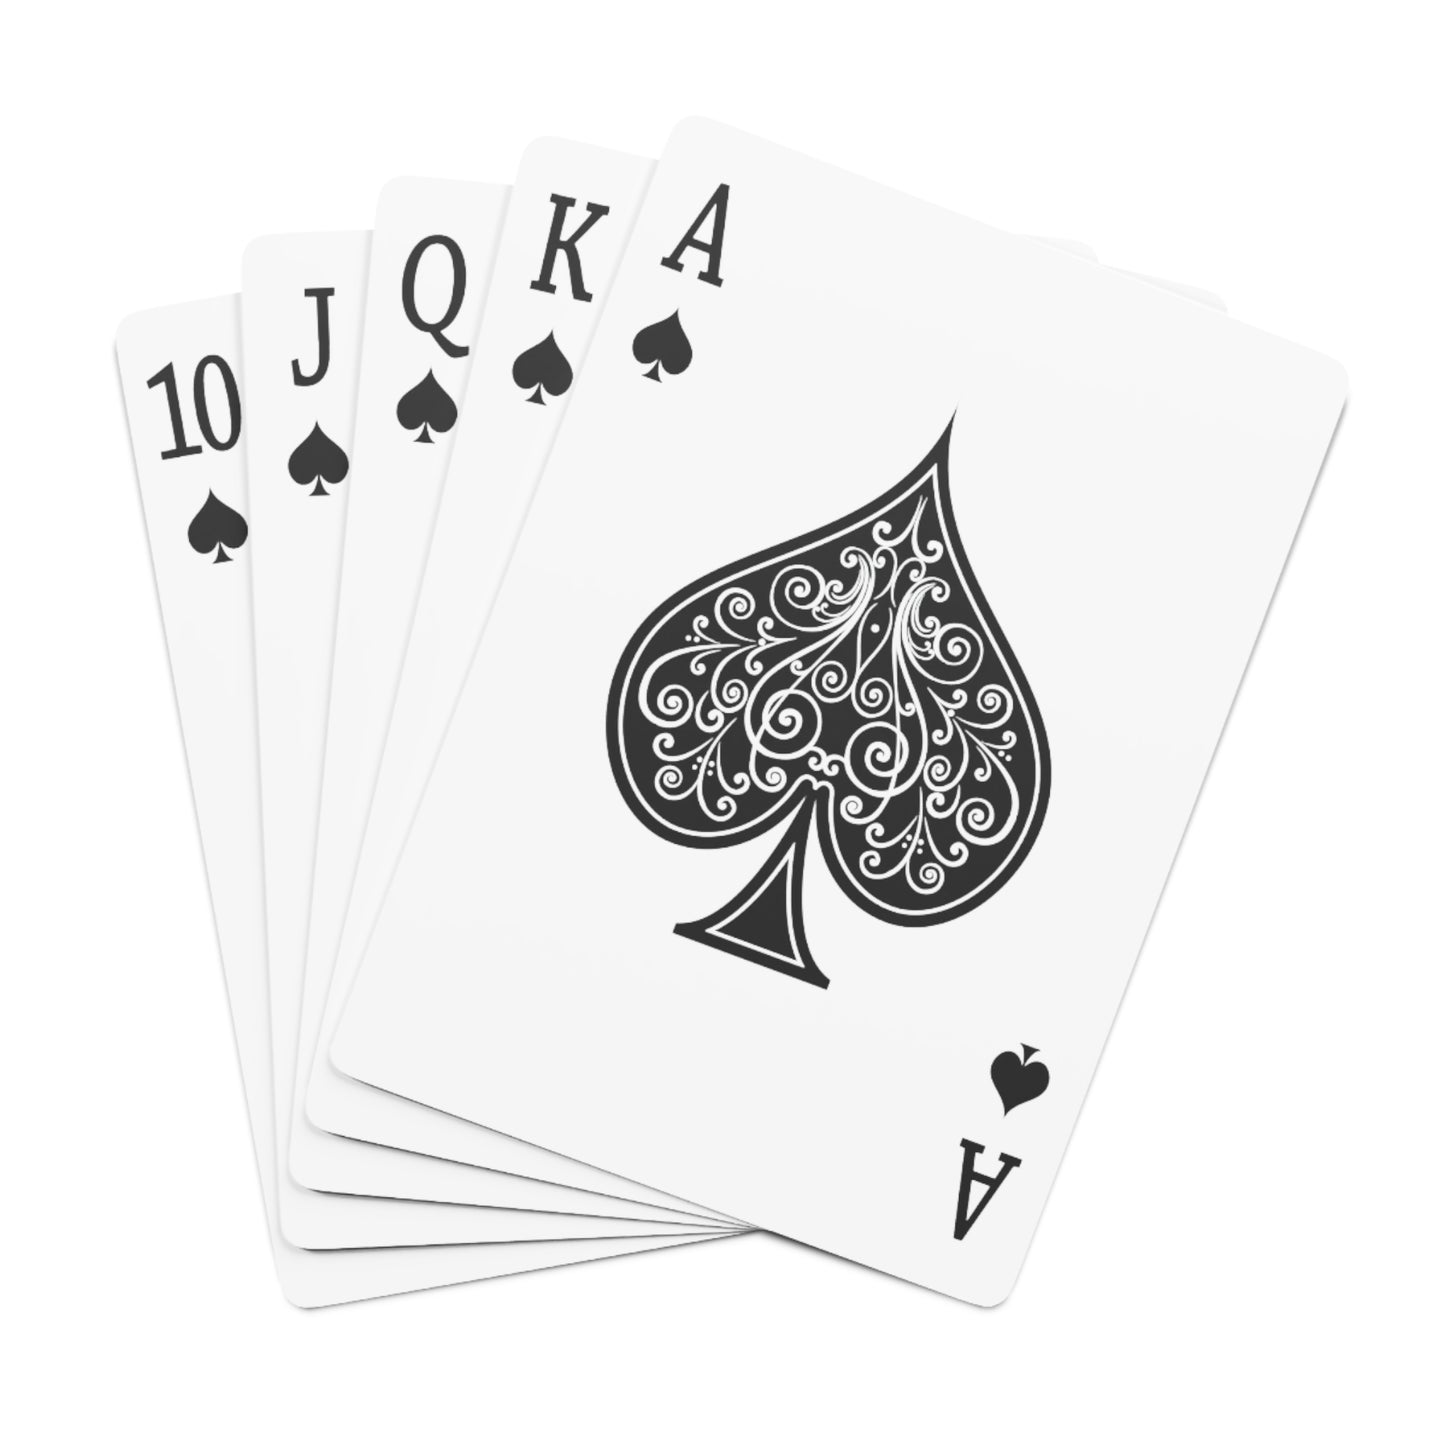 “Simply Herrington” Playing Cards